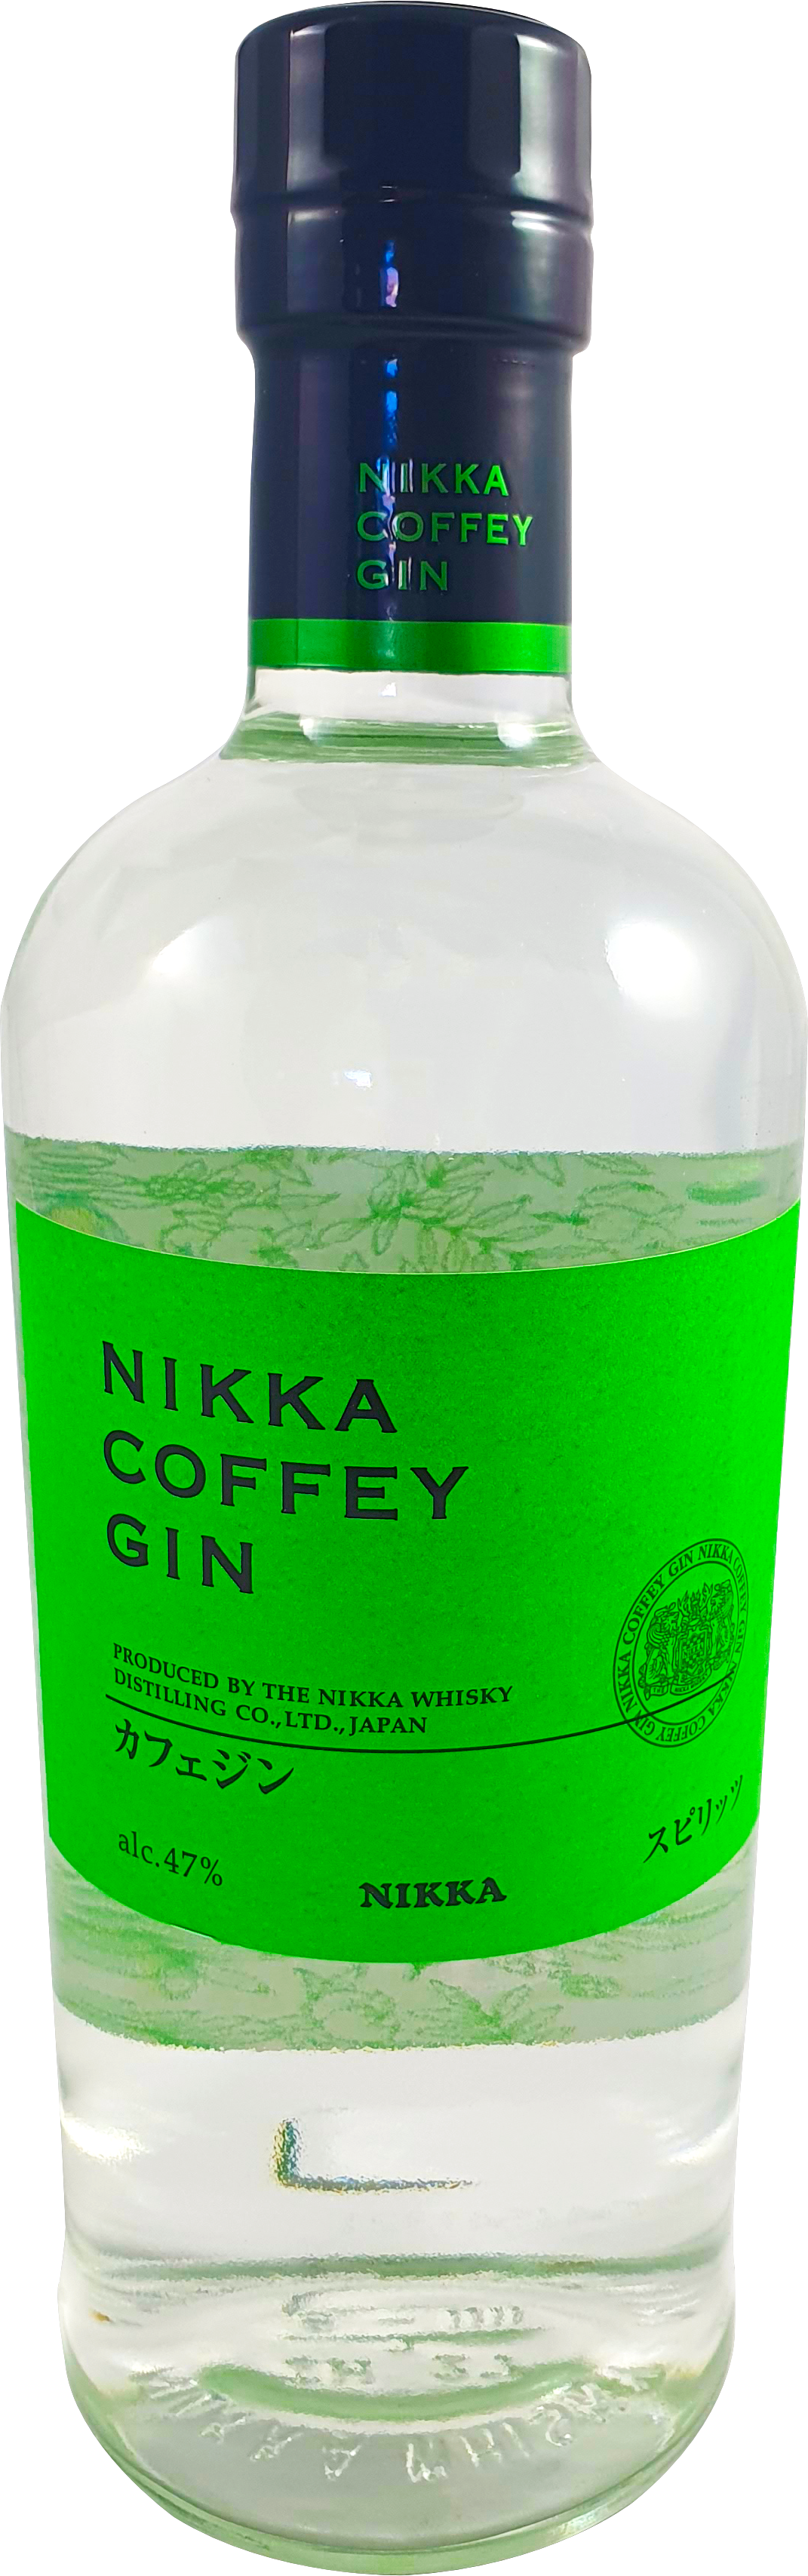 Nikka Coffey Gin Japan 47% 